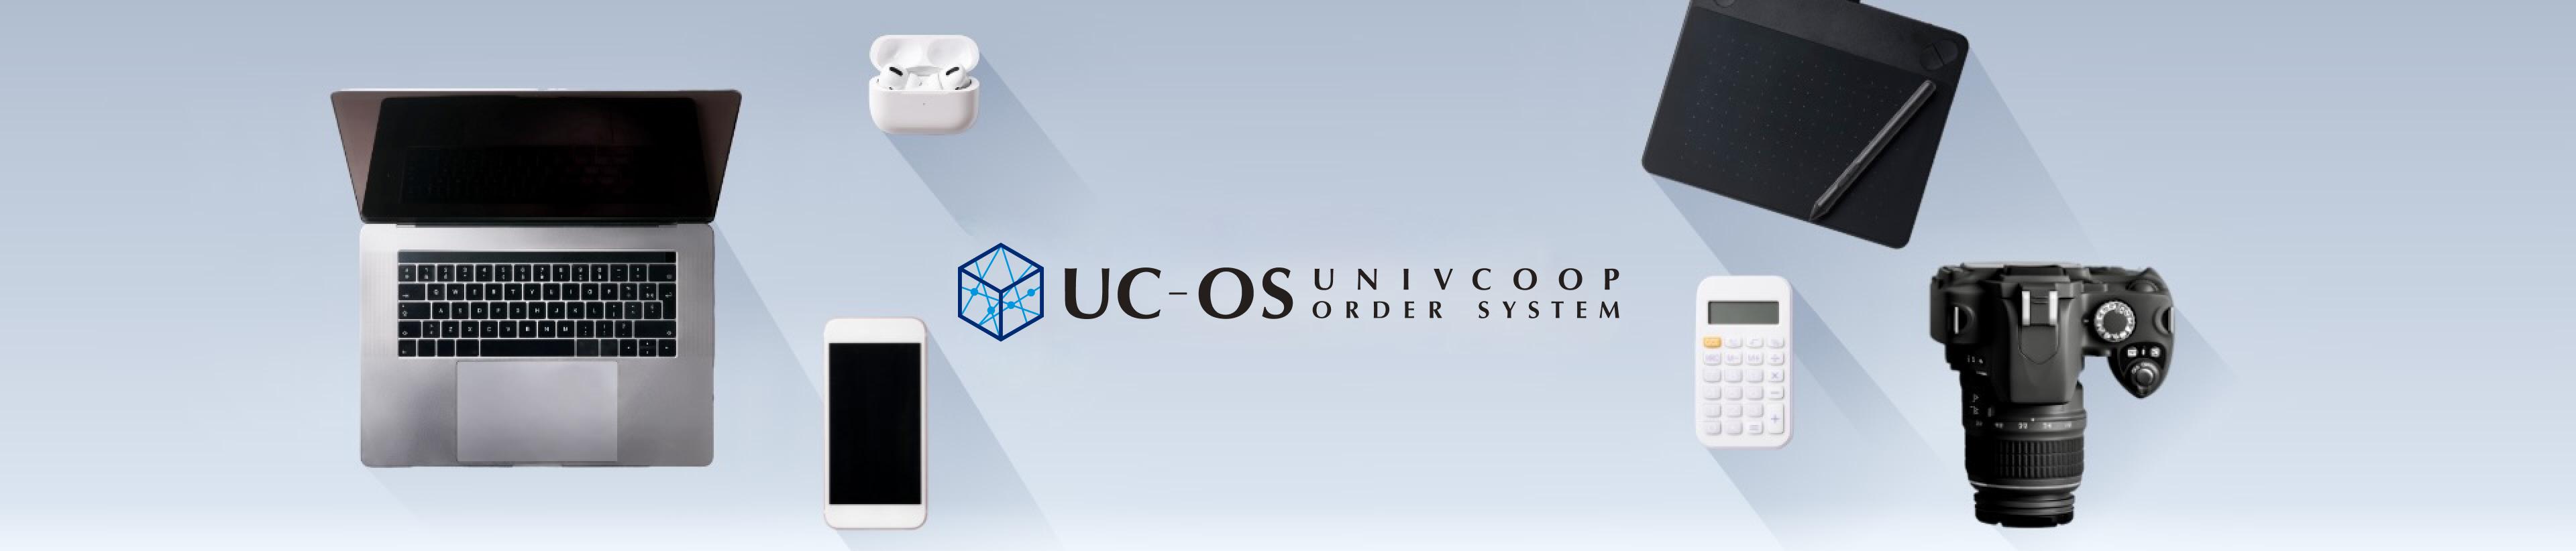 UC-OS UNIVCOOP ORDER SYSTEM